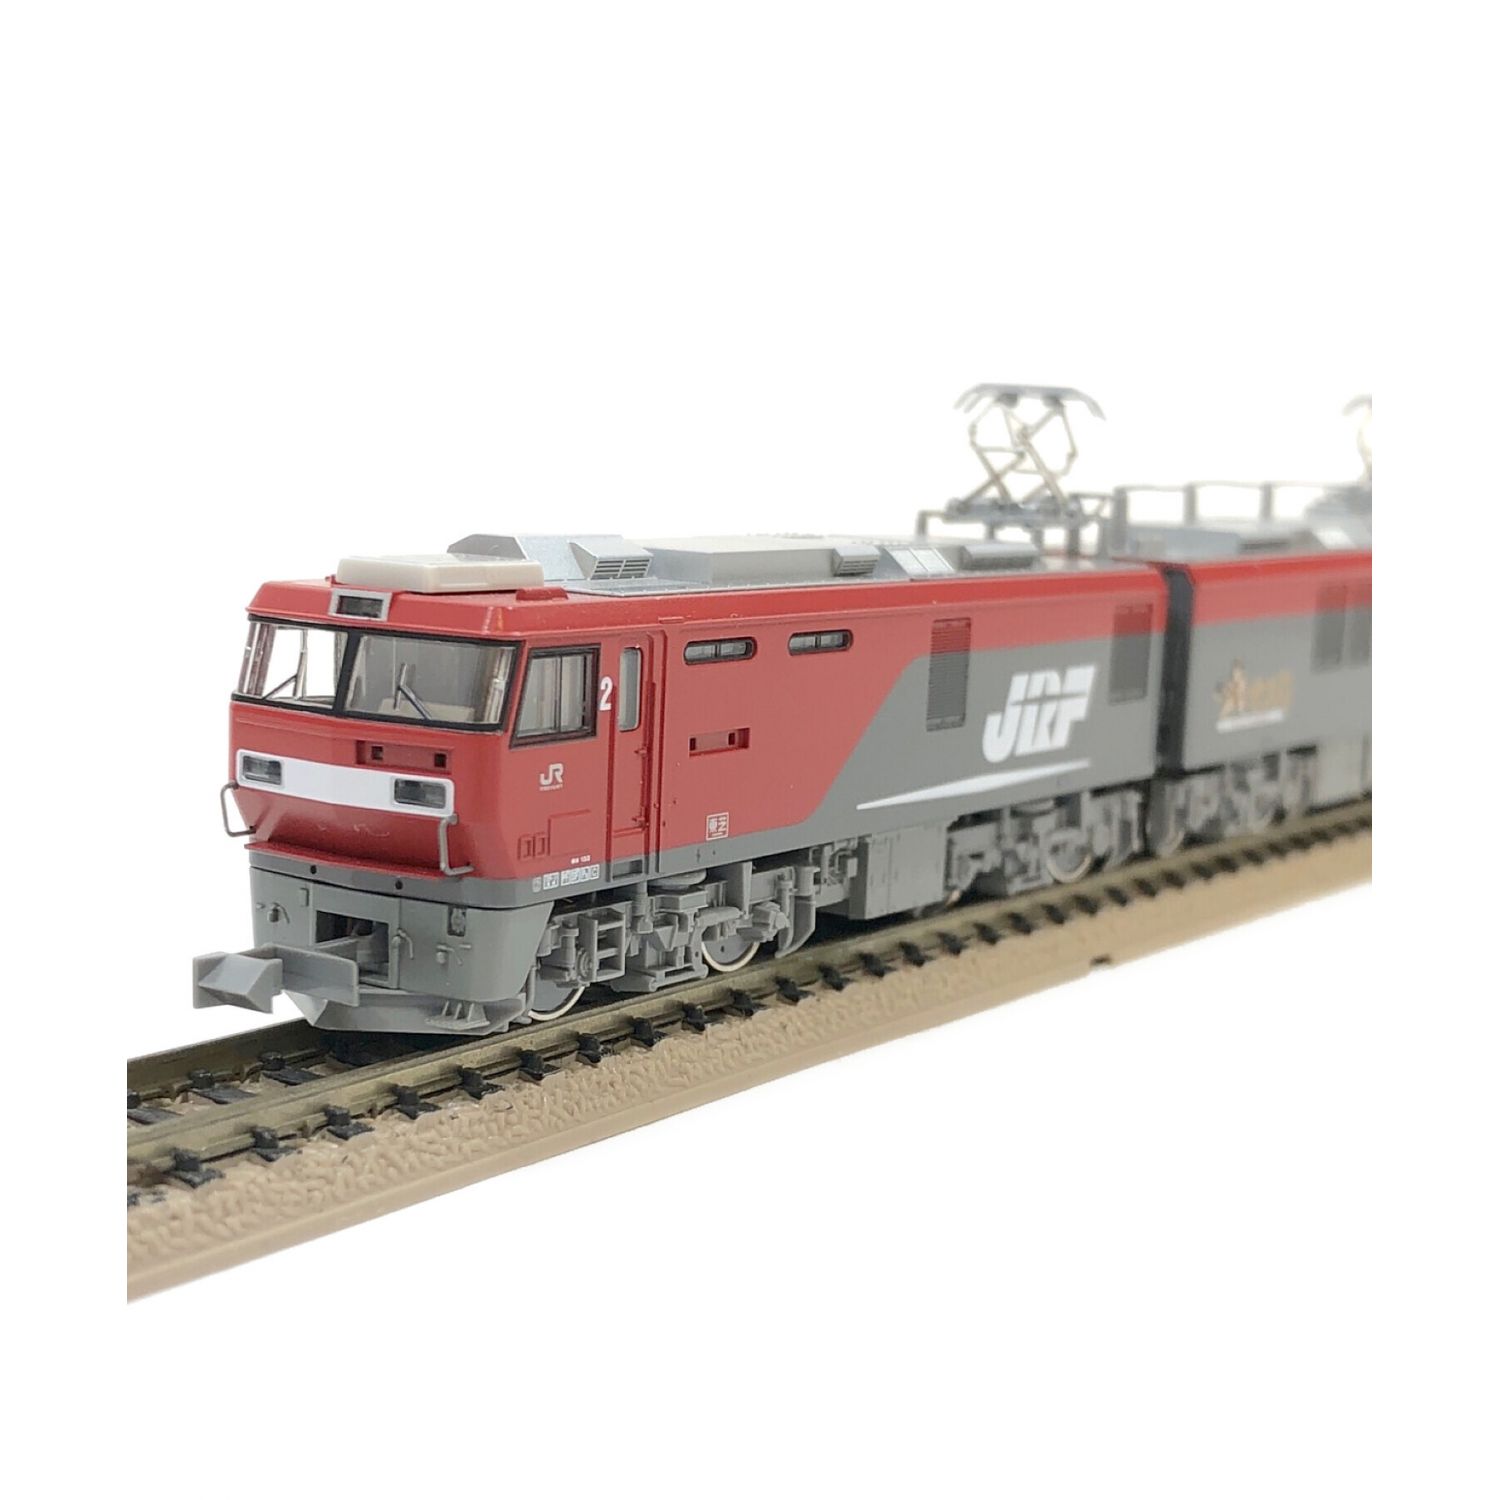 超話題新作 KATO 3037-2 EH500 3次形 後期仕様 Nゲージ 鉄道模型 